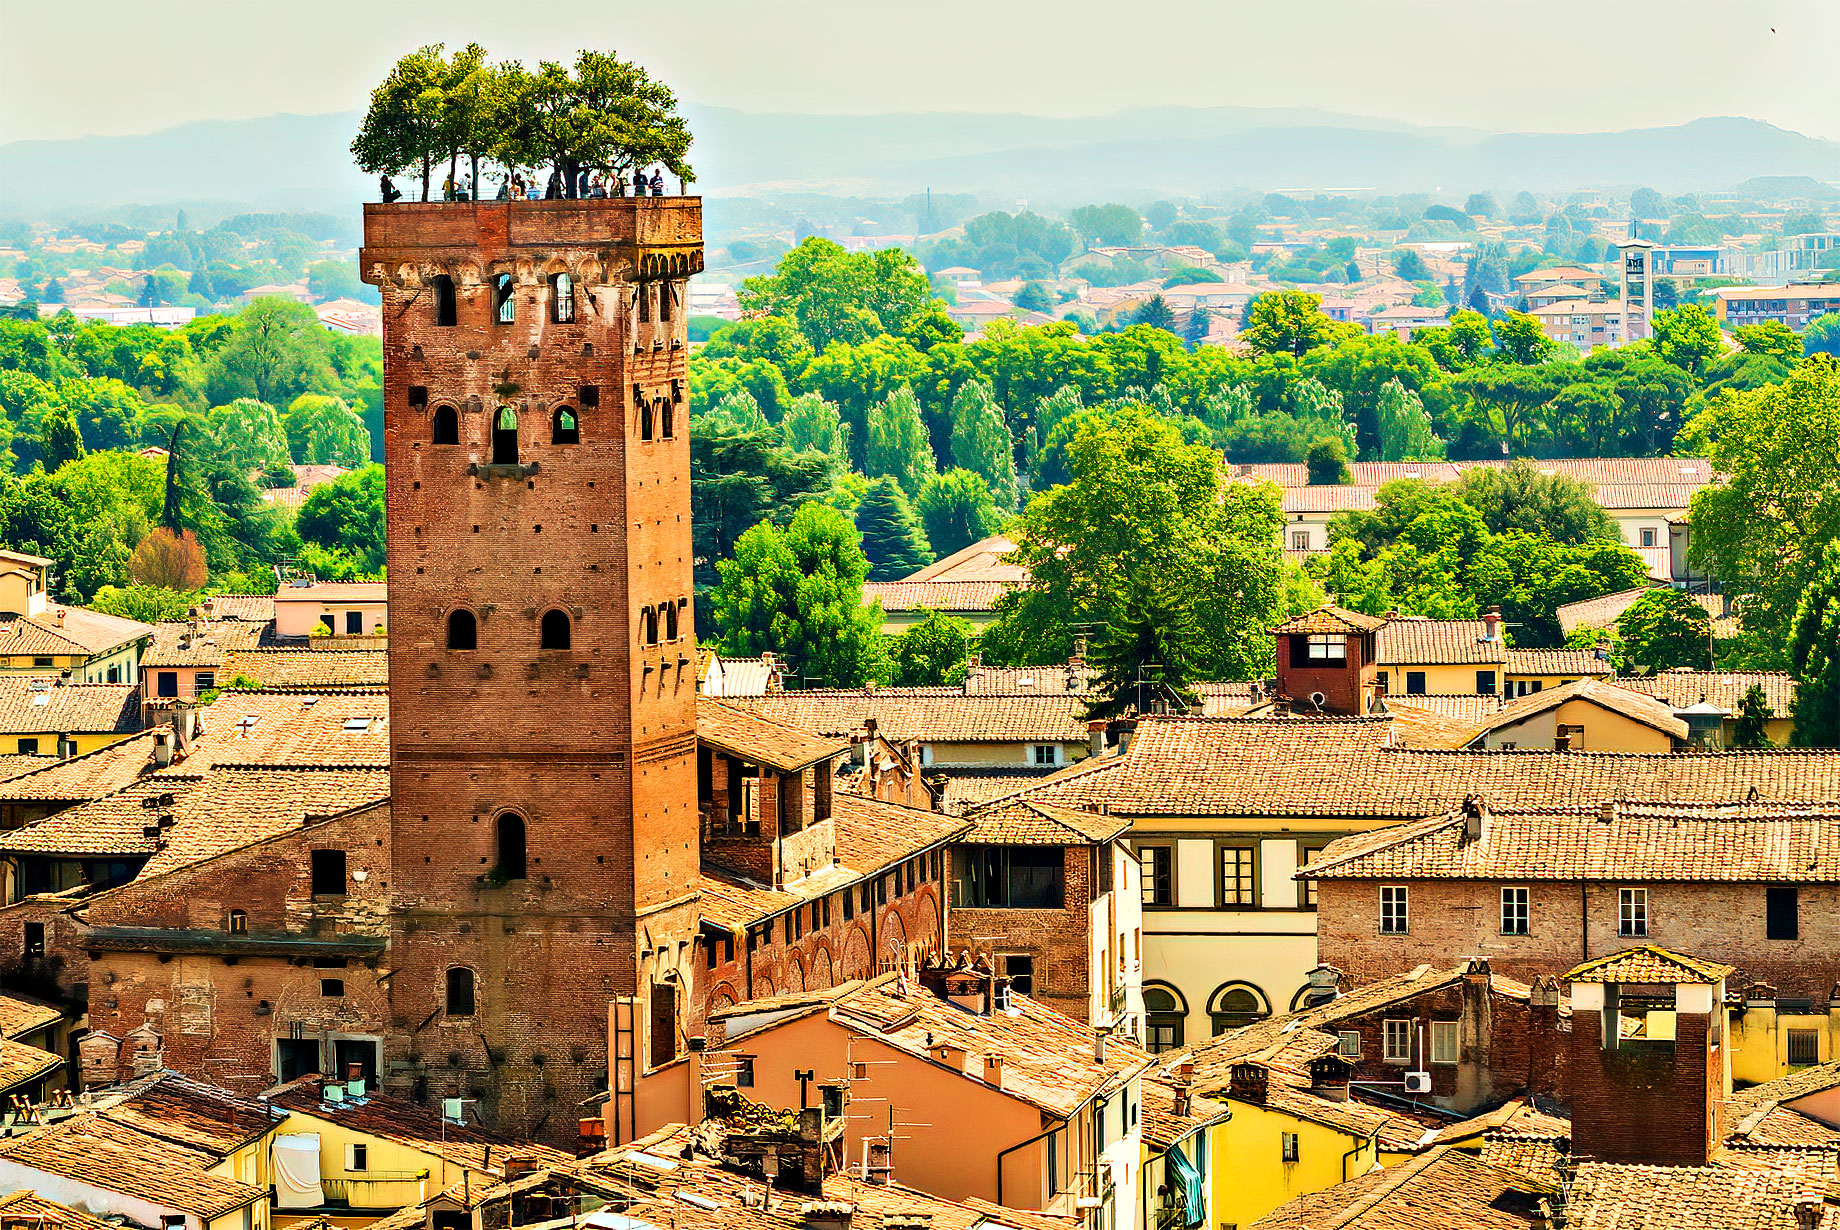 Medieval Guinigi Tower in Lucca, Italy